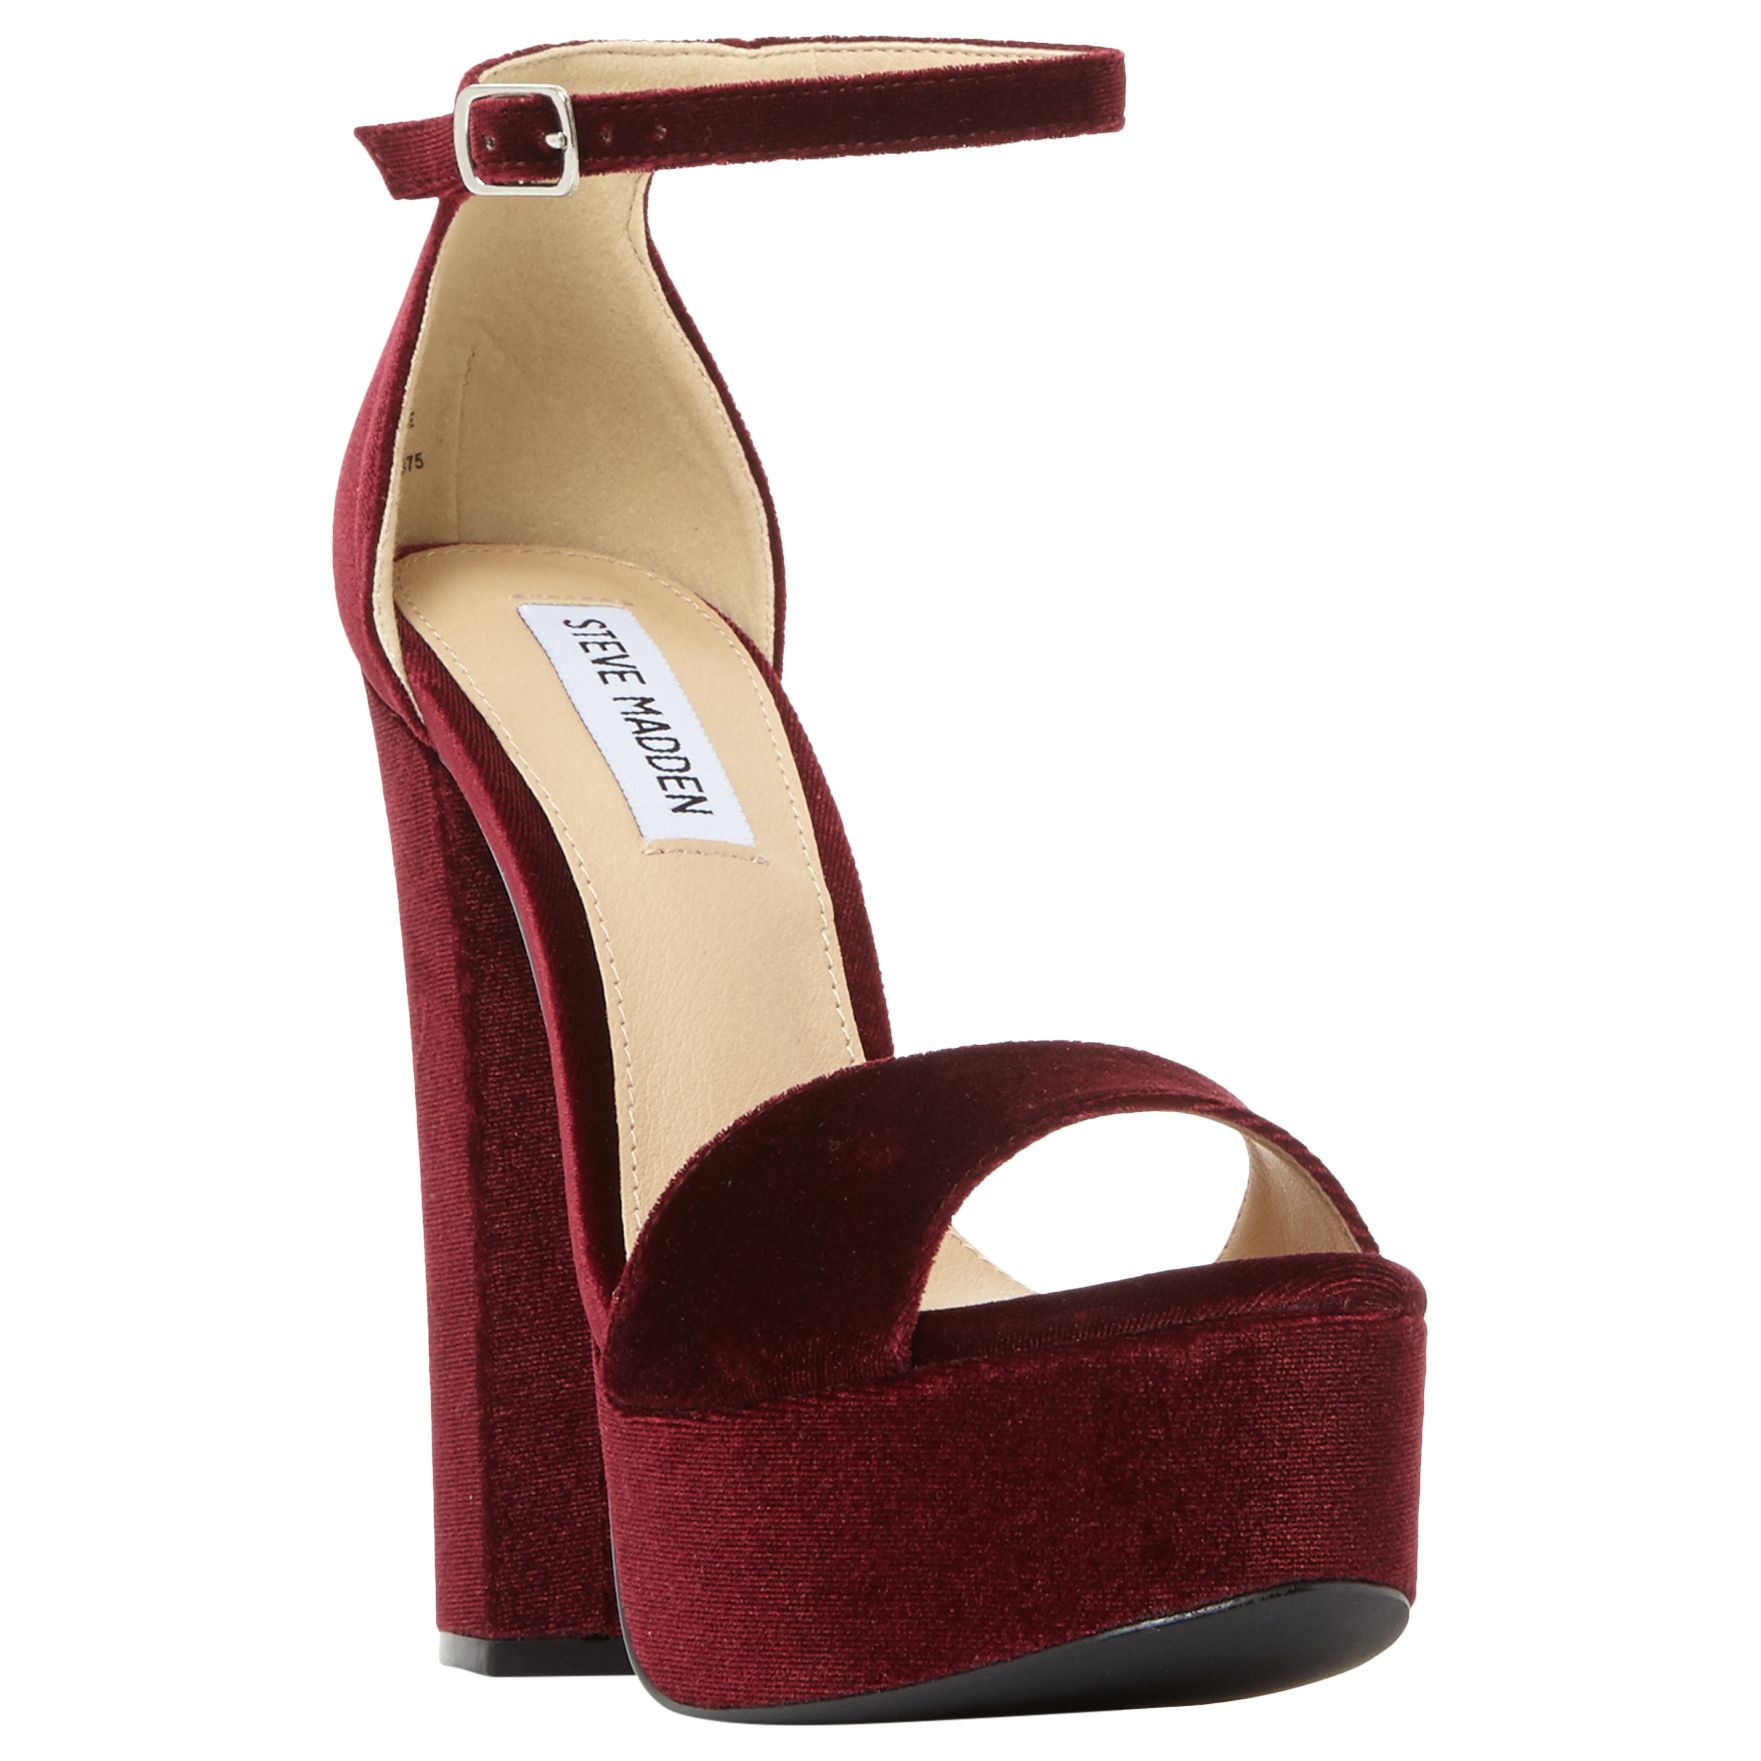 burgundy platform sandals